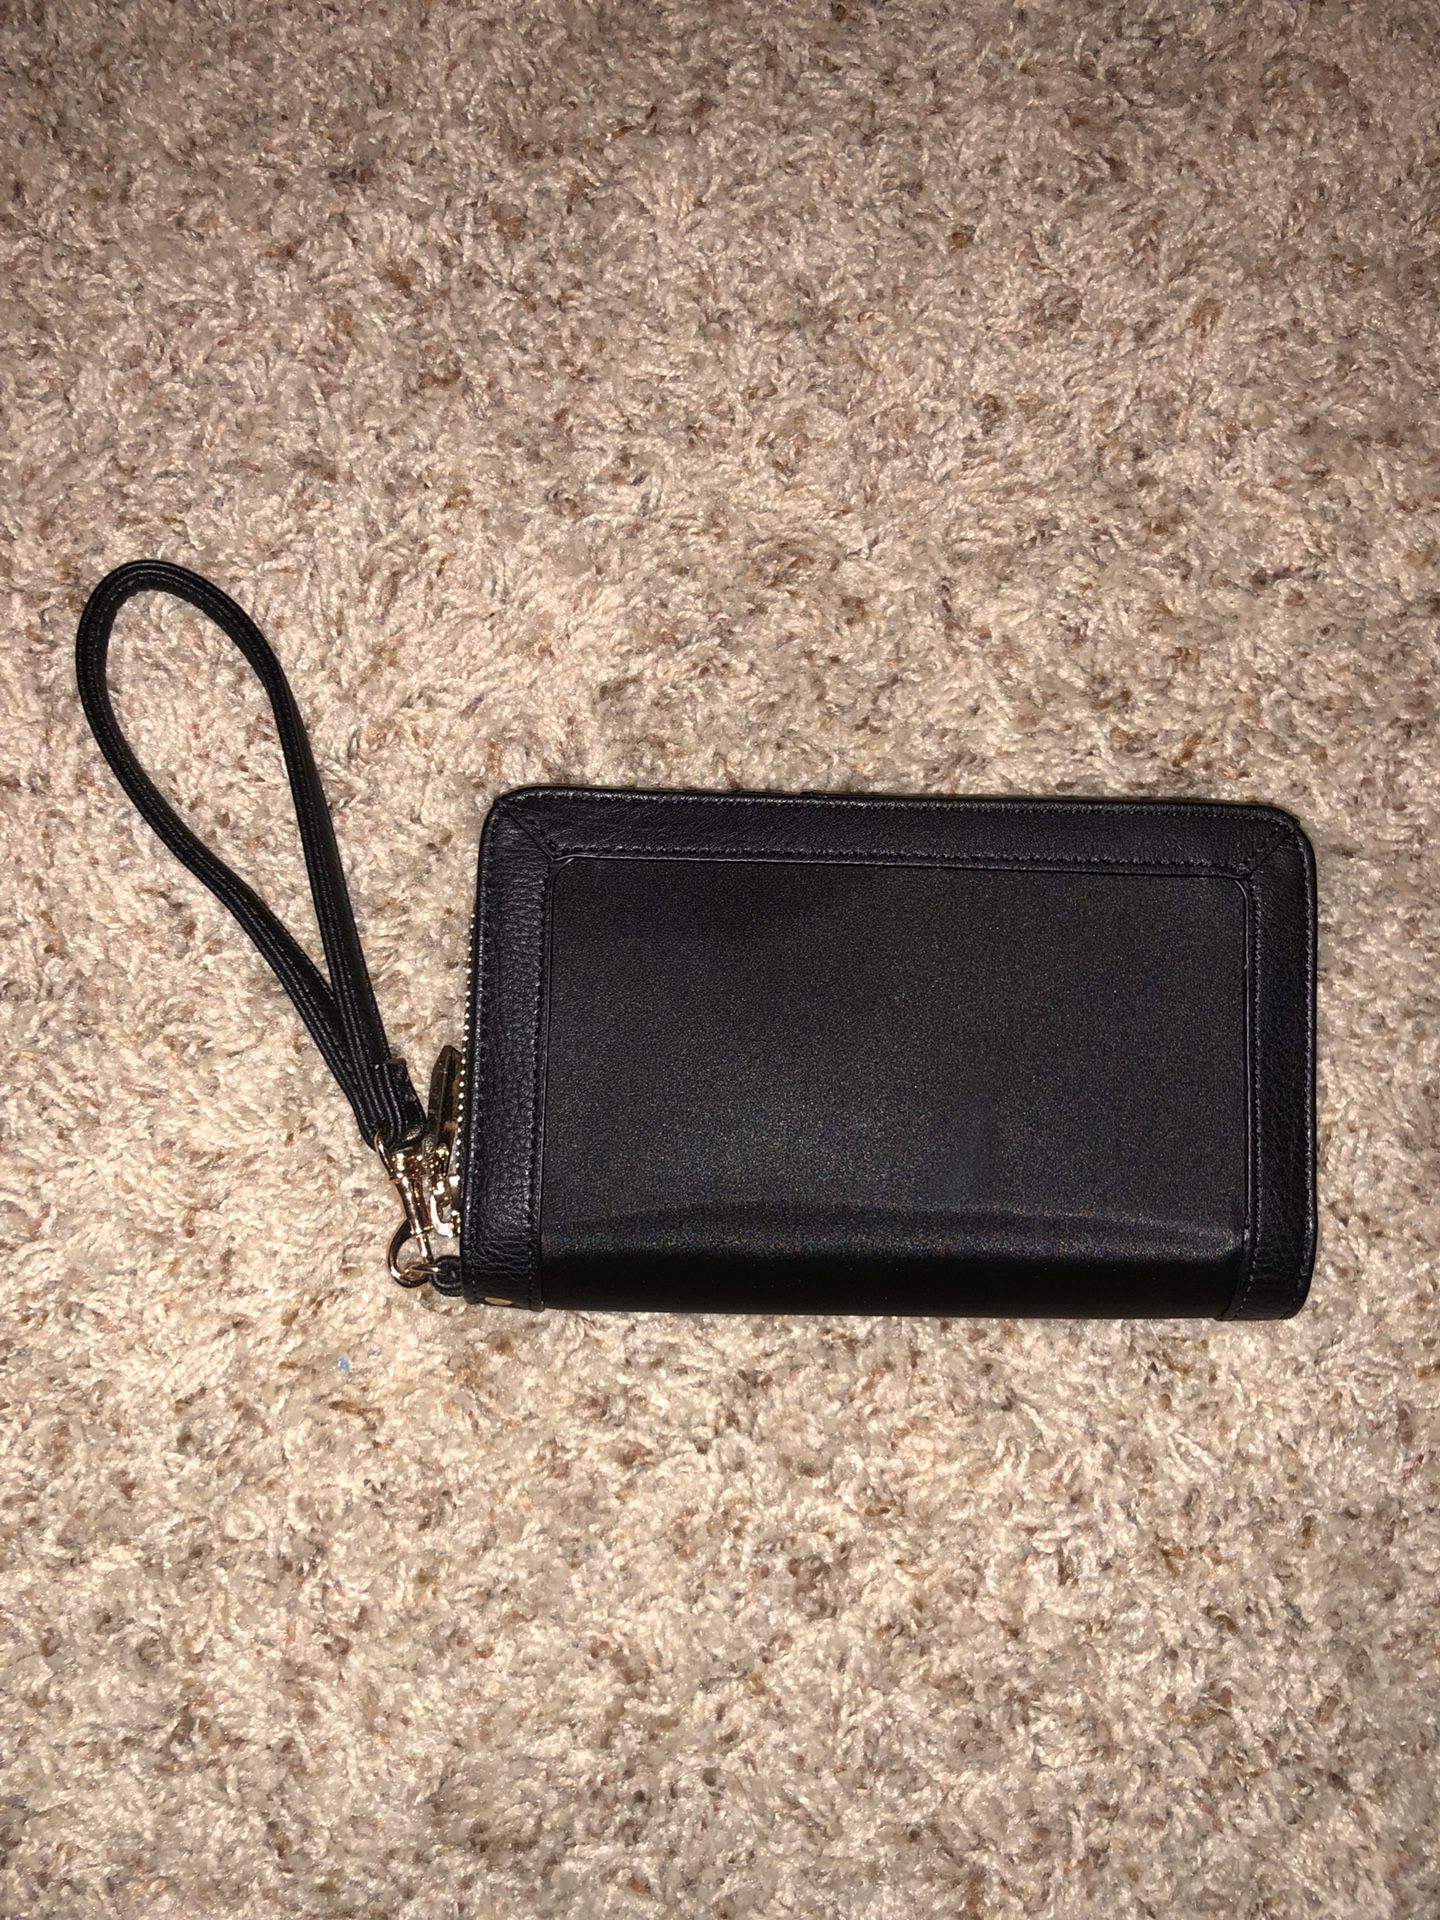 Black wallet / wristlet